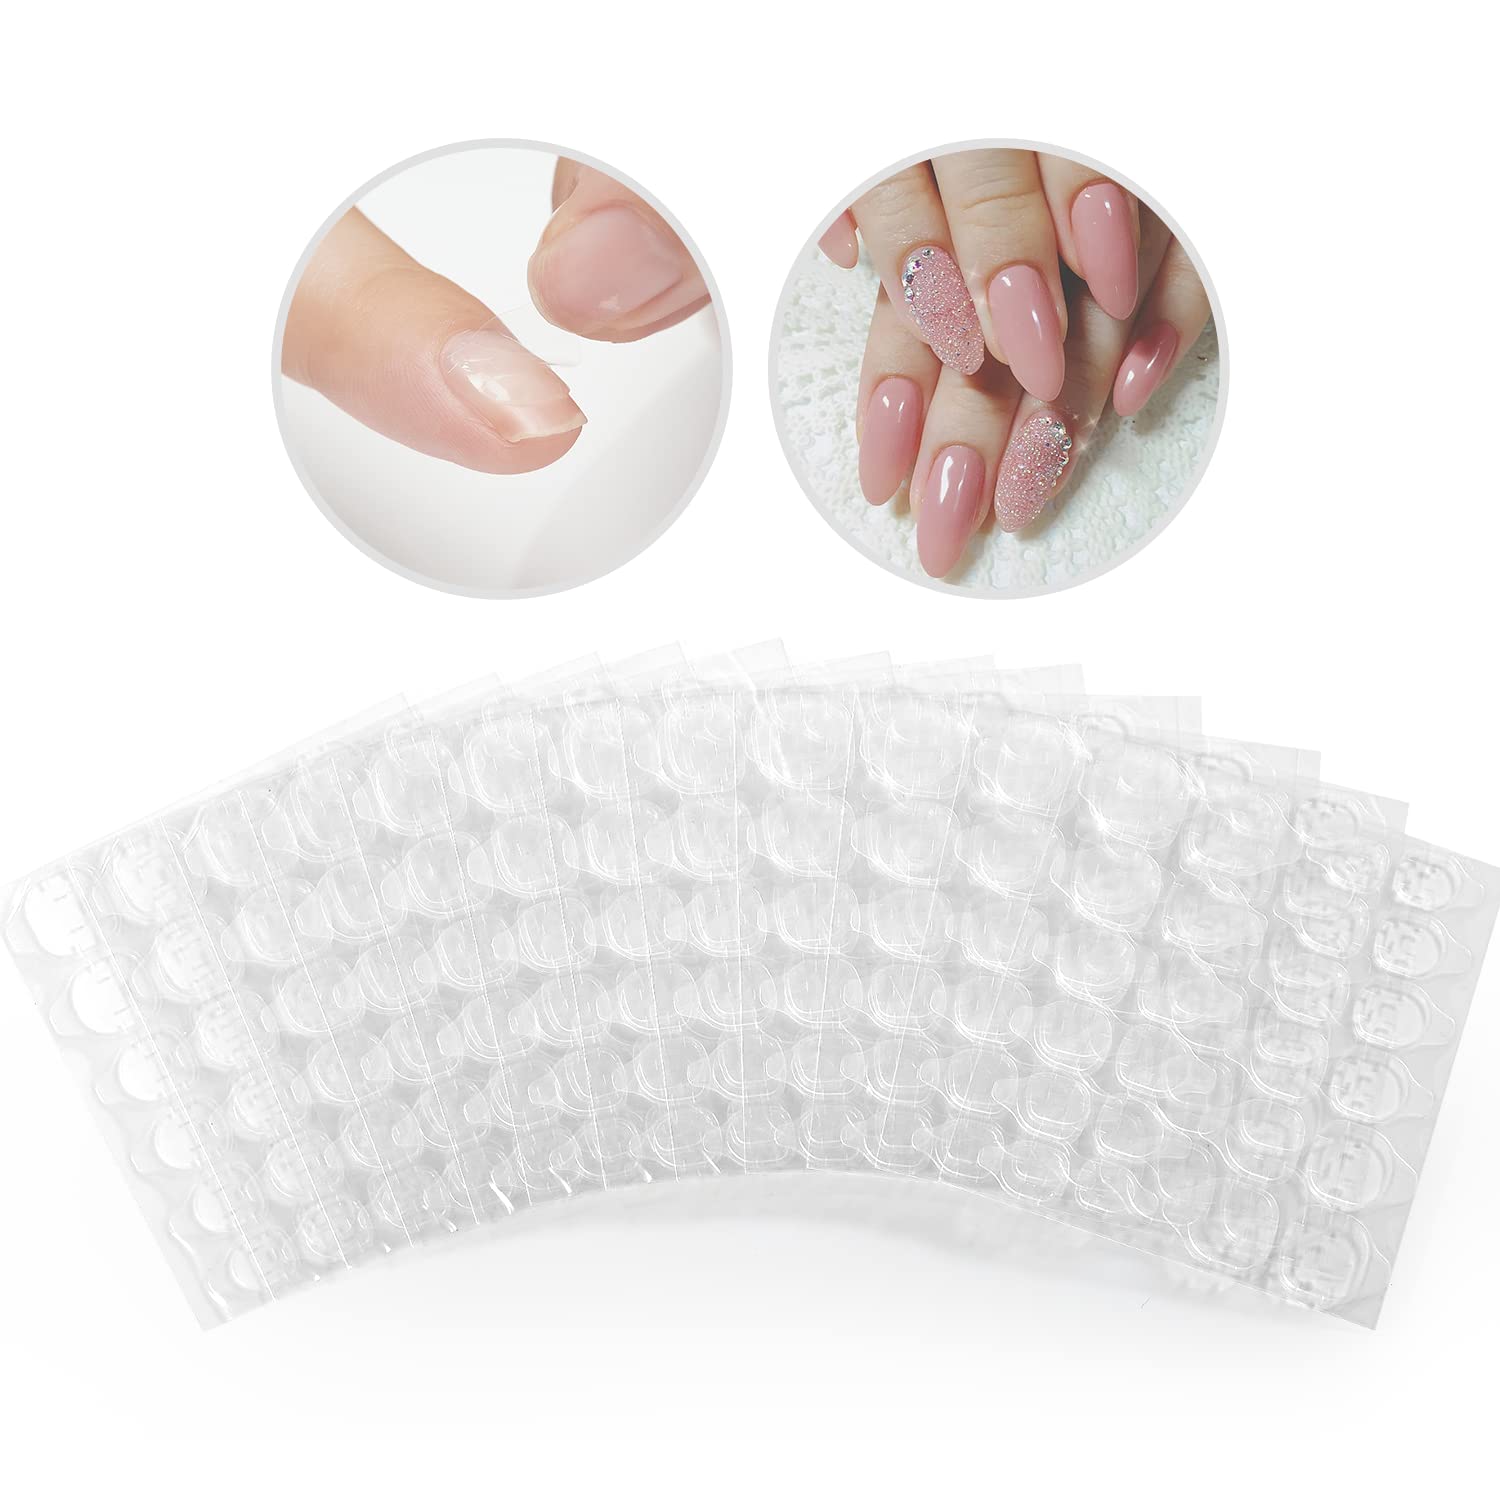 Nail Adhesive Tab Press On Nail Glue Sticker Double Side, 240 PCS 10 Sheets Waterproof Breathable Super Sticky Nails Tab for False Nail Tape Fake Nail Tips Clear Jelly Adhesive Nail Tab Glue